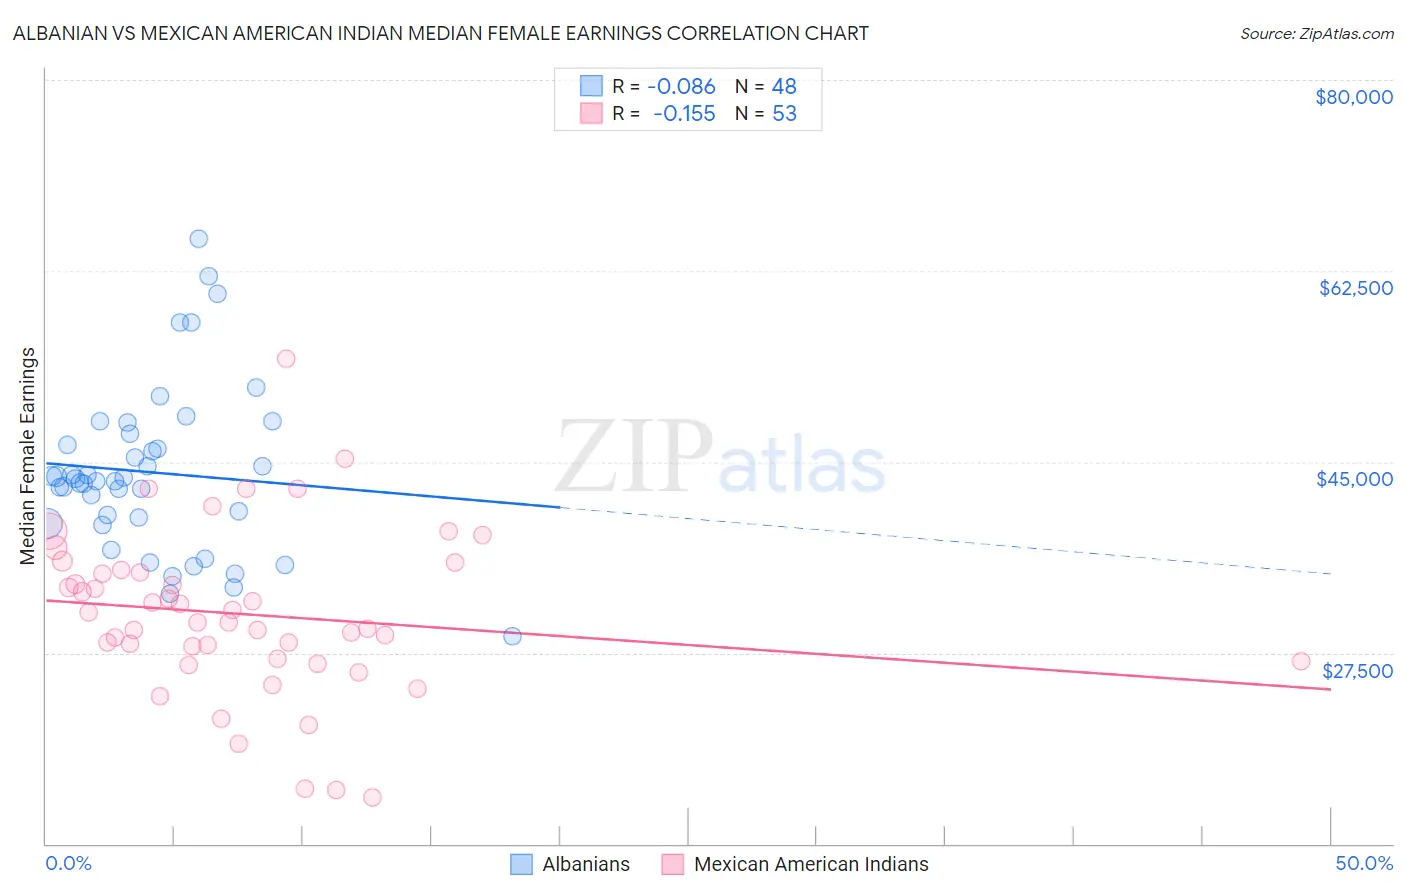 Albanian vs Mexican American Indian Median Female Earnings